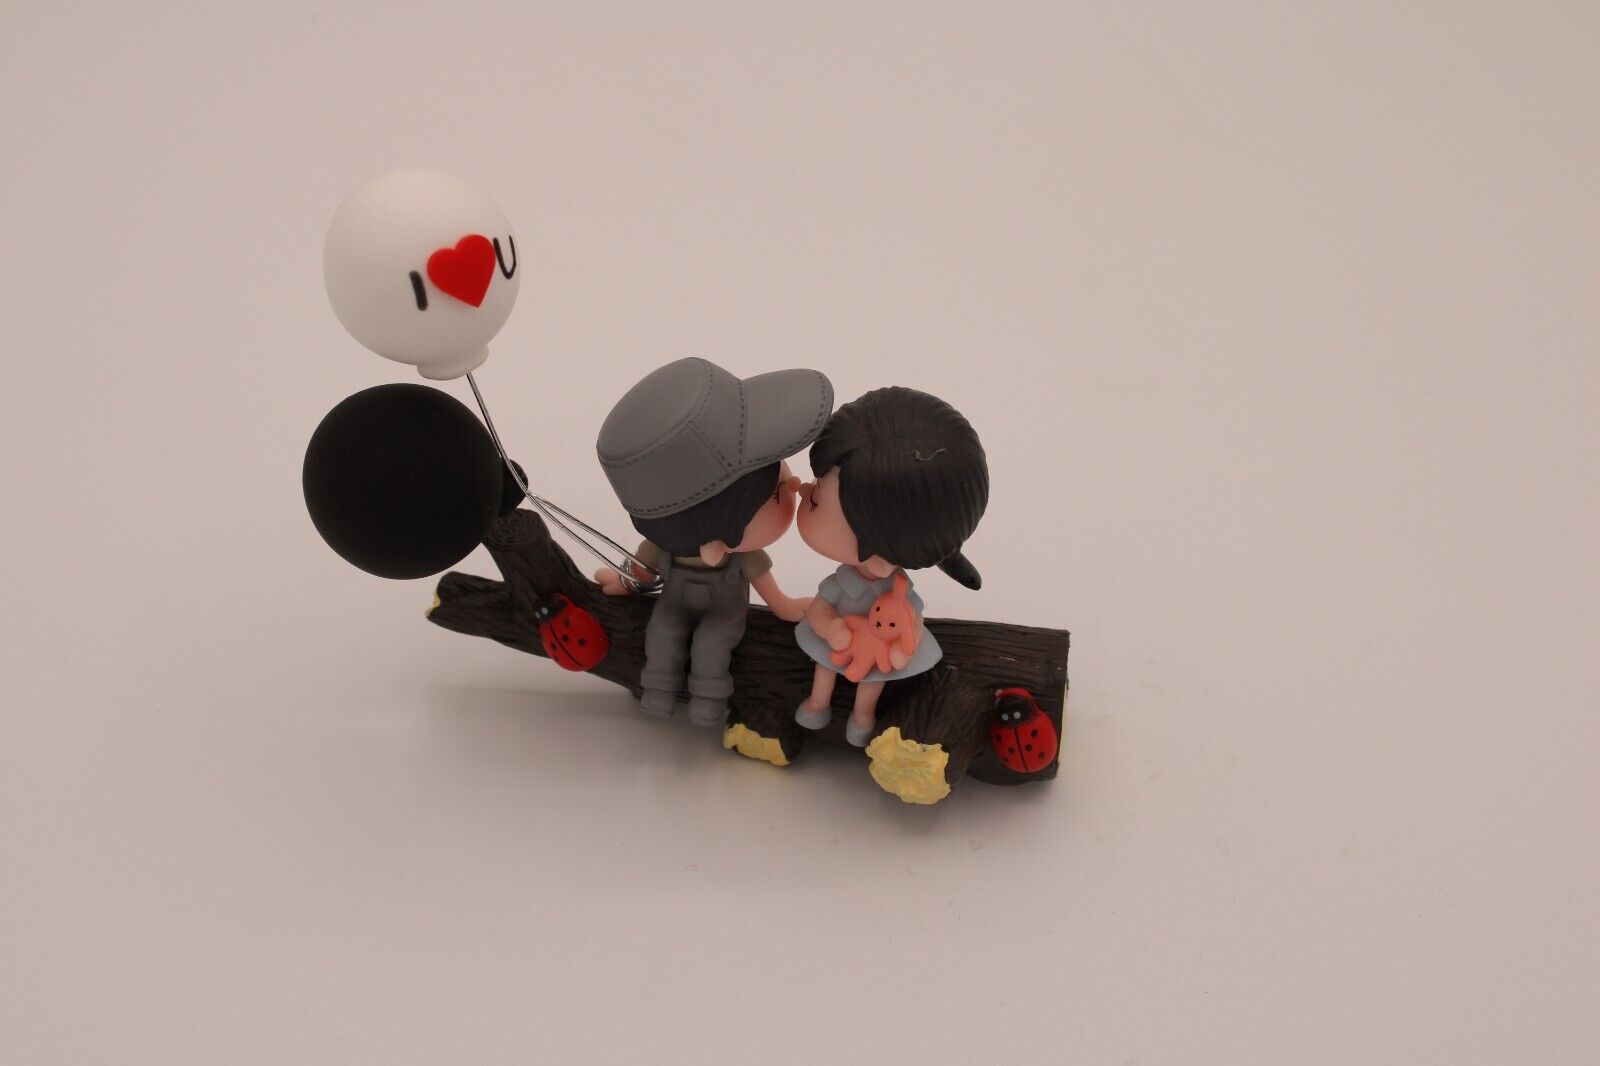 Figurines in Love Miniature Weddings anniversary Couple Figures love craft